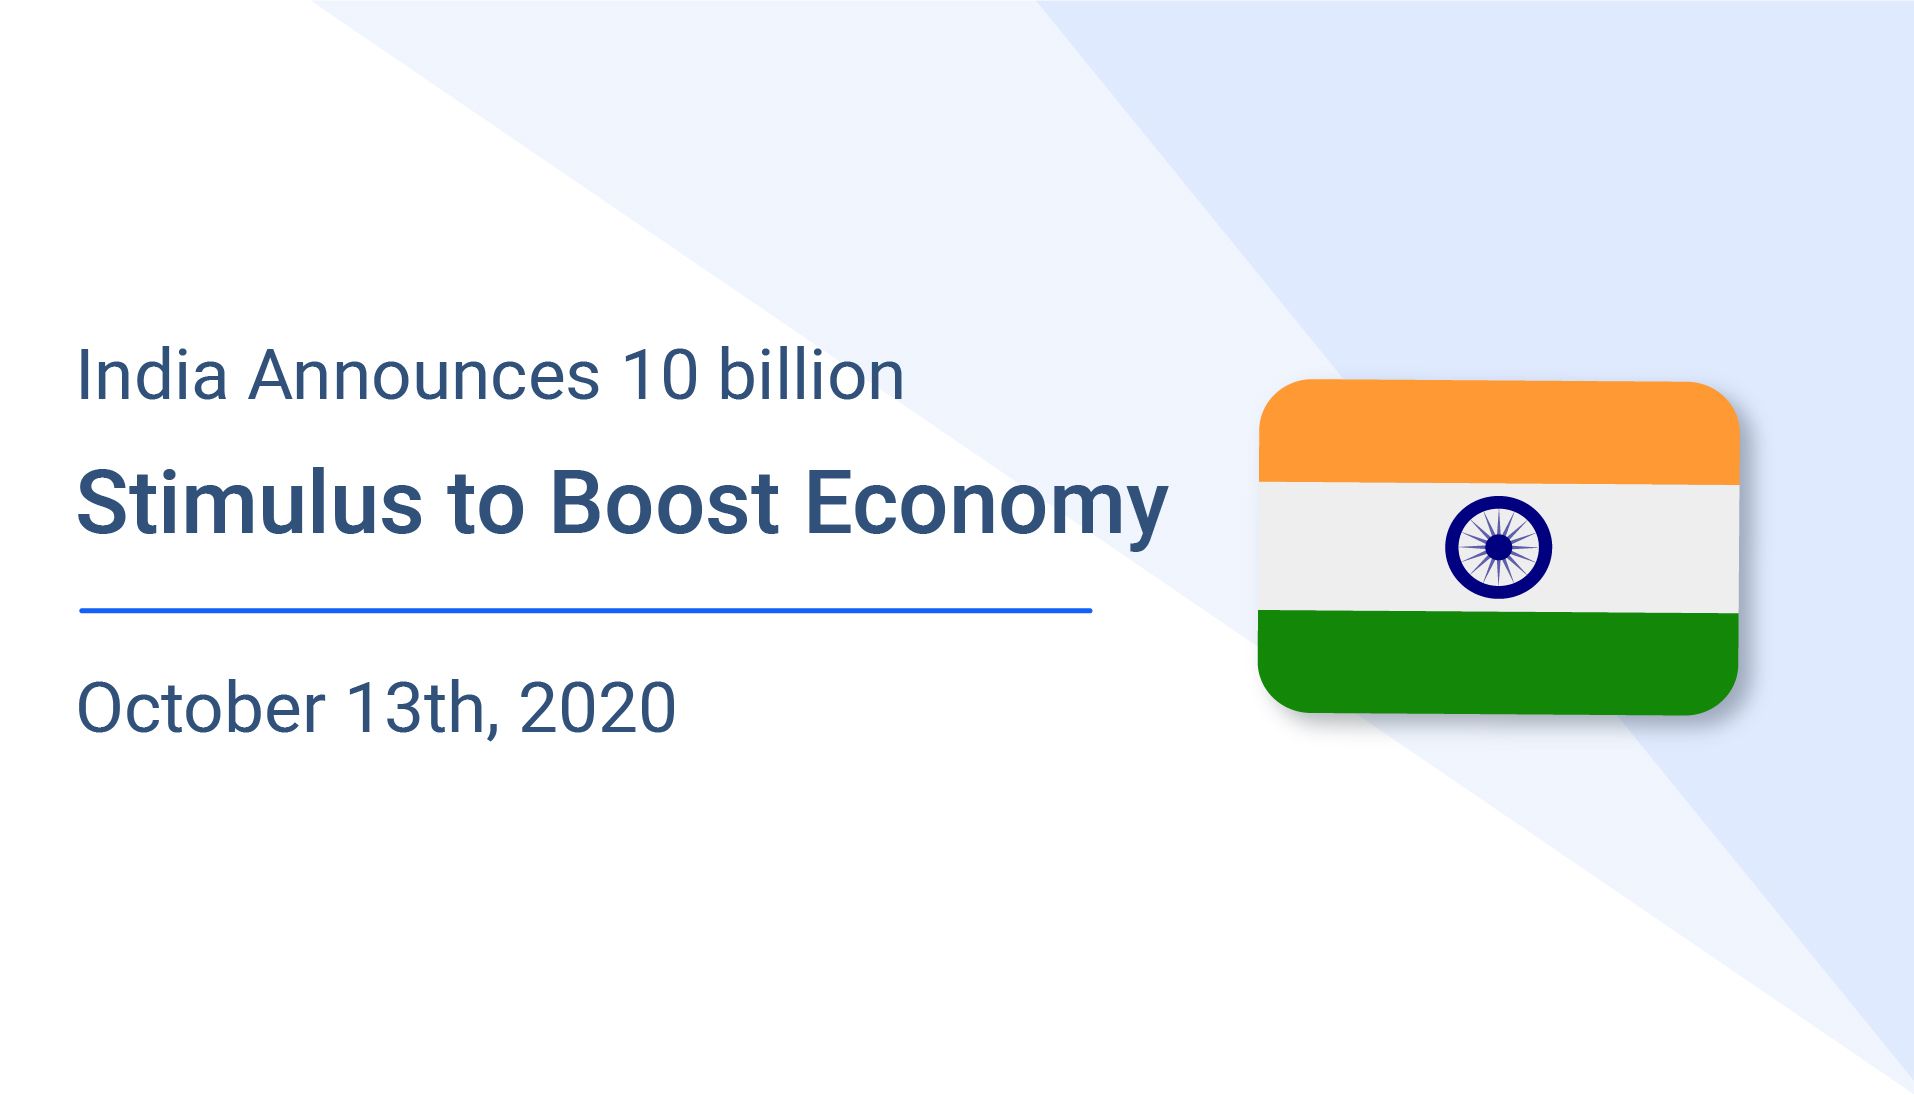 India Announces $10 Billion Stimulus to Boost Economy